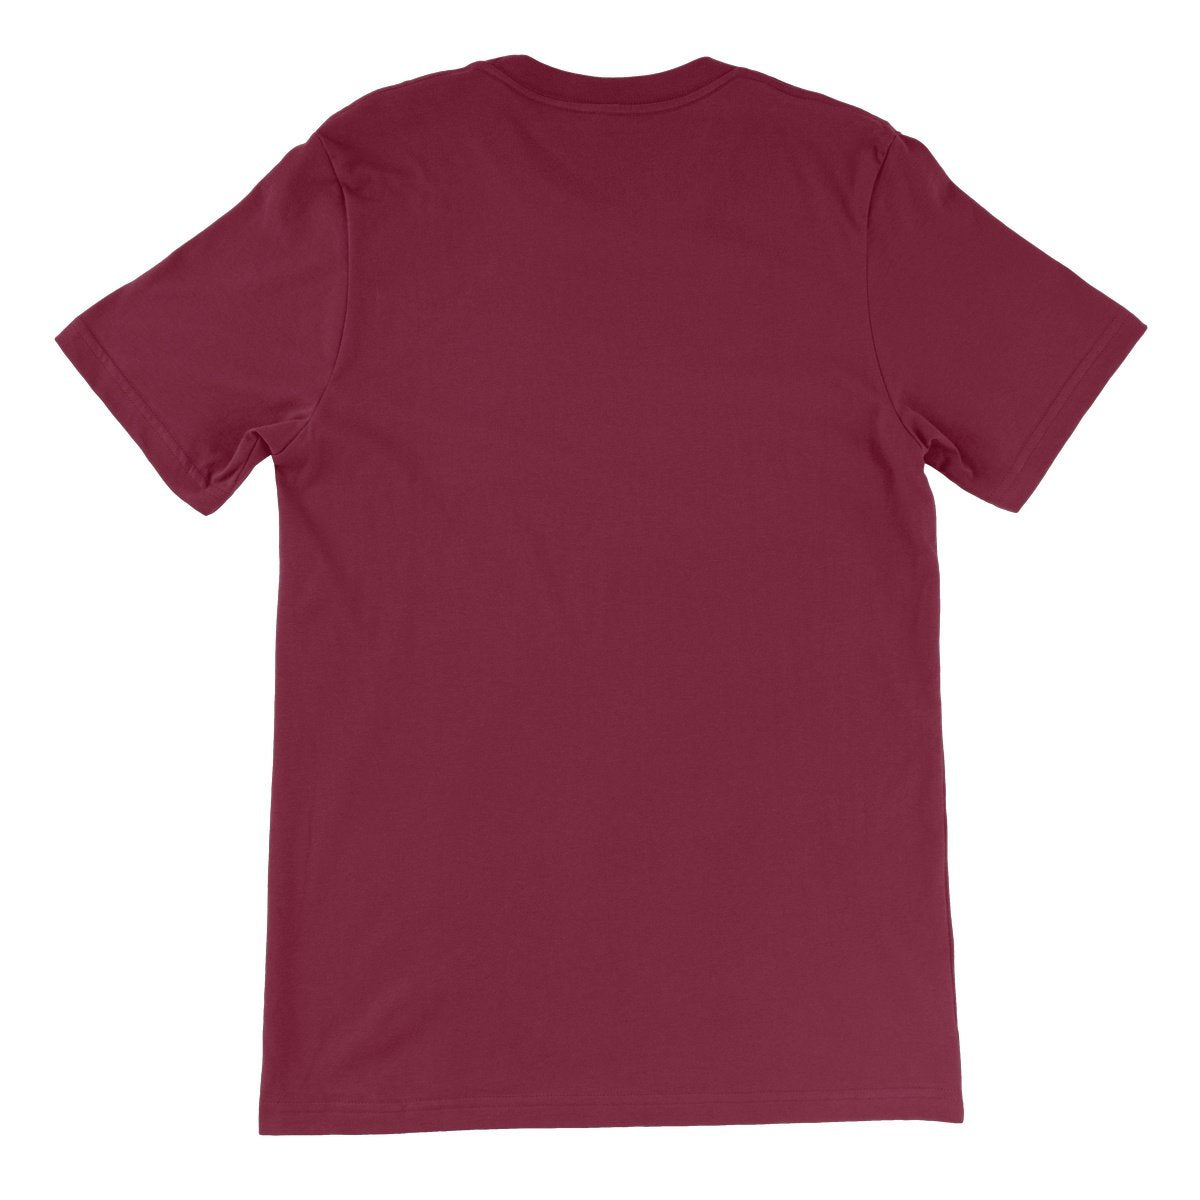 Unisex Premium T-Shirt - 'Dog Tired'